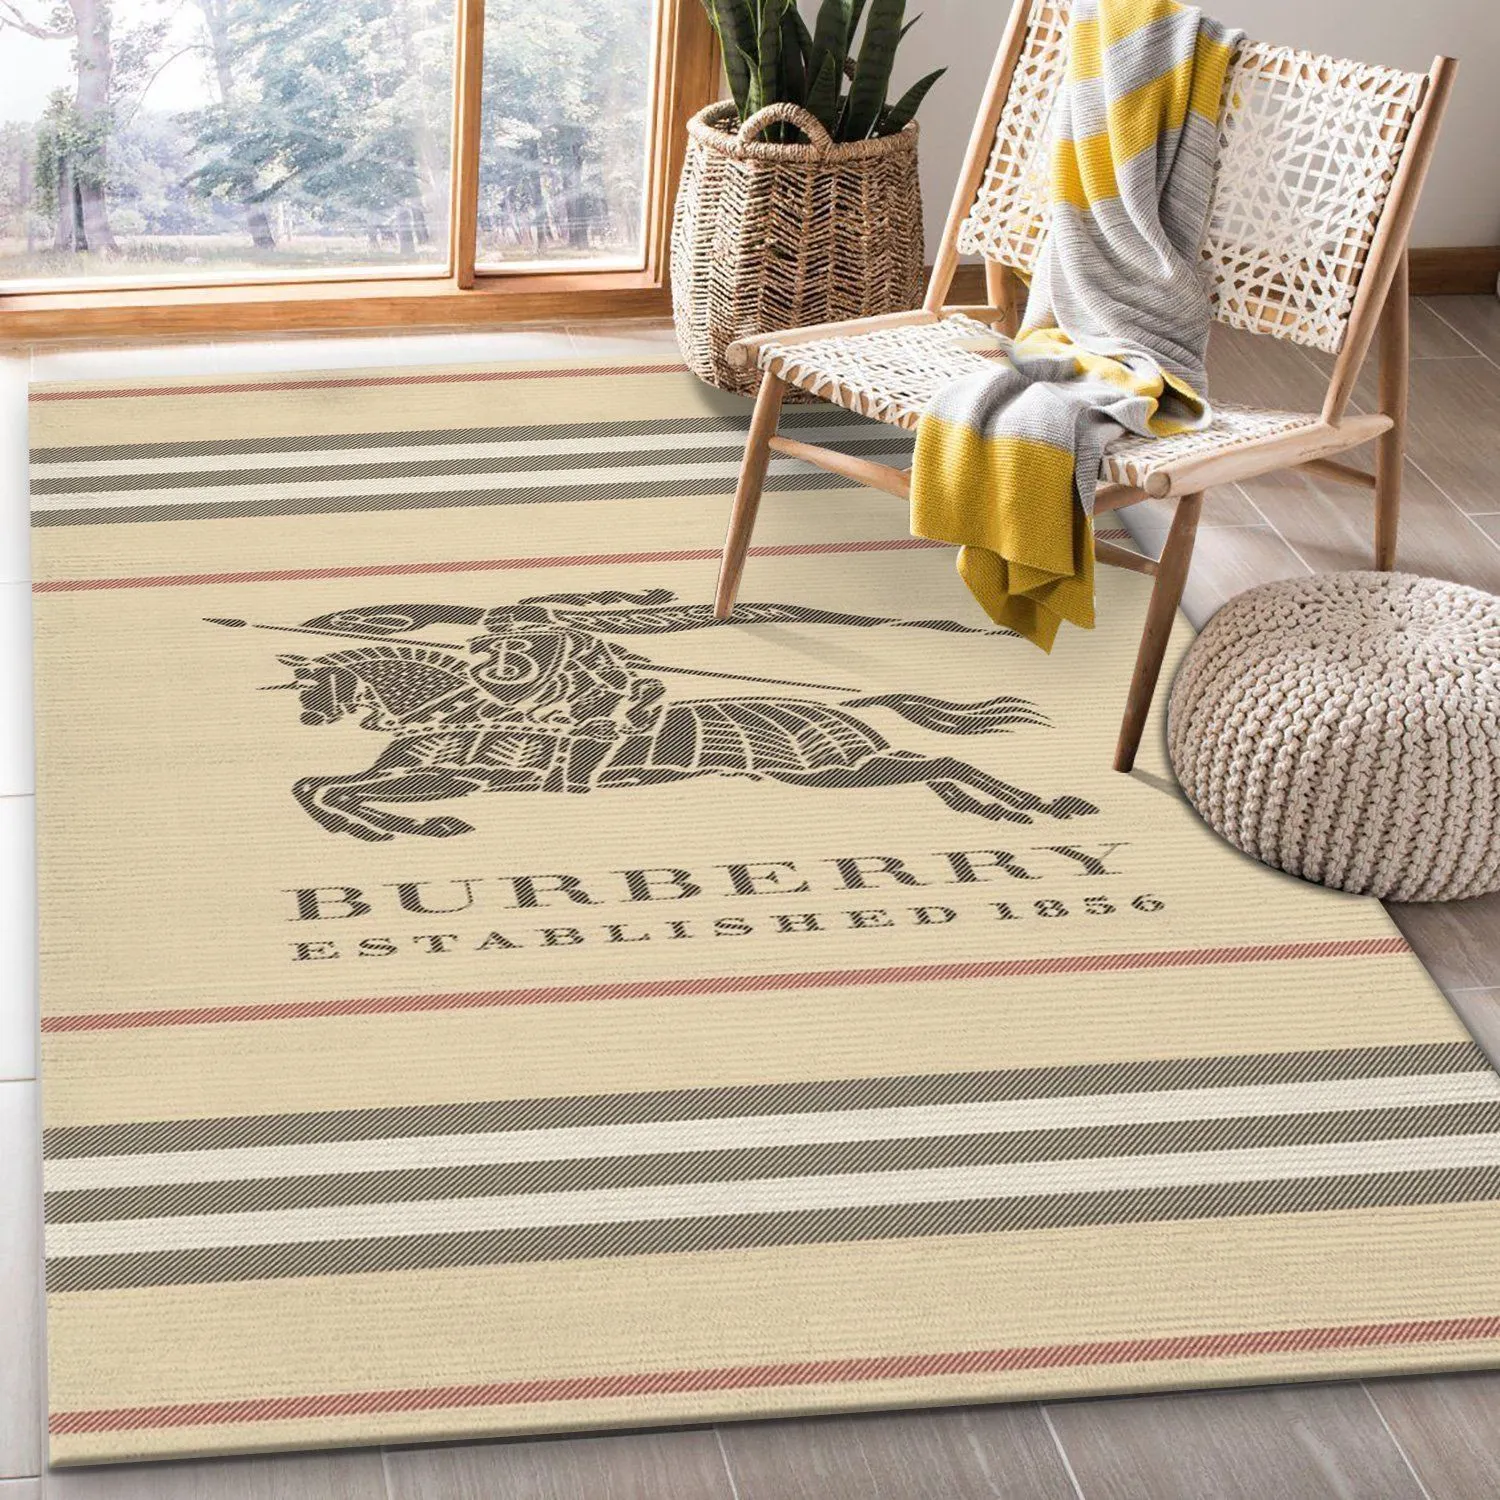 Burberry Rectangle Rug Fashion Brand Luxury Home Decor Door Mat Area Carpet